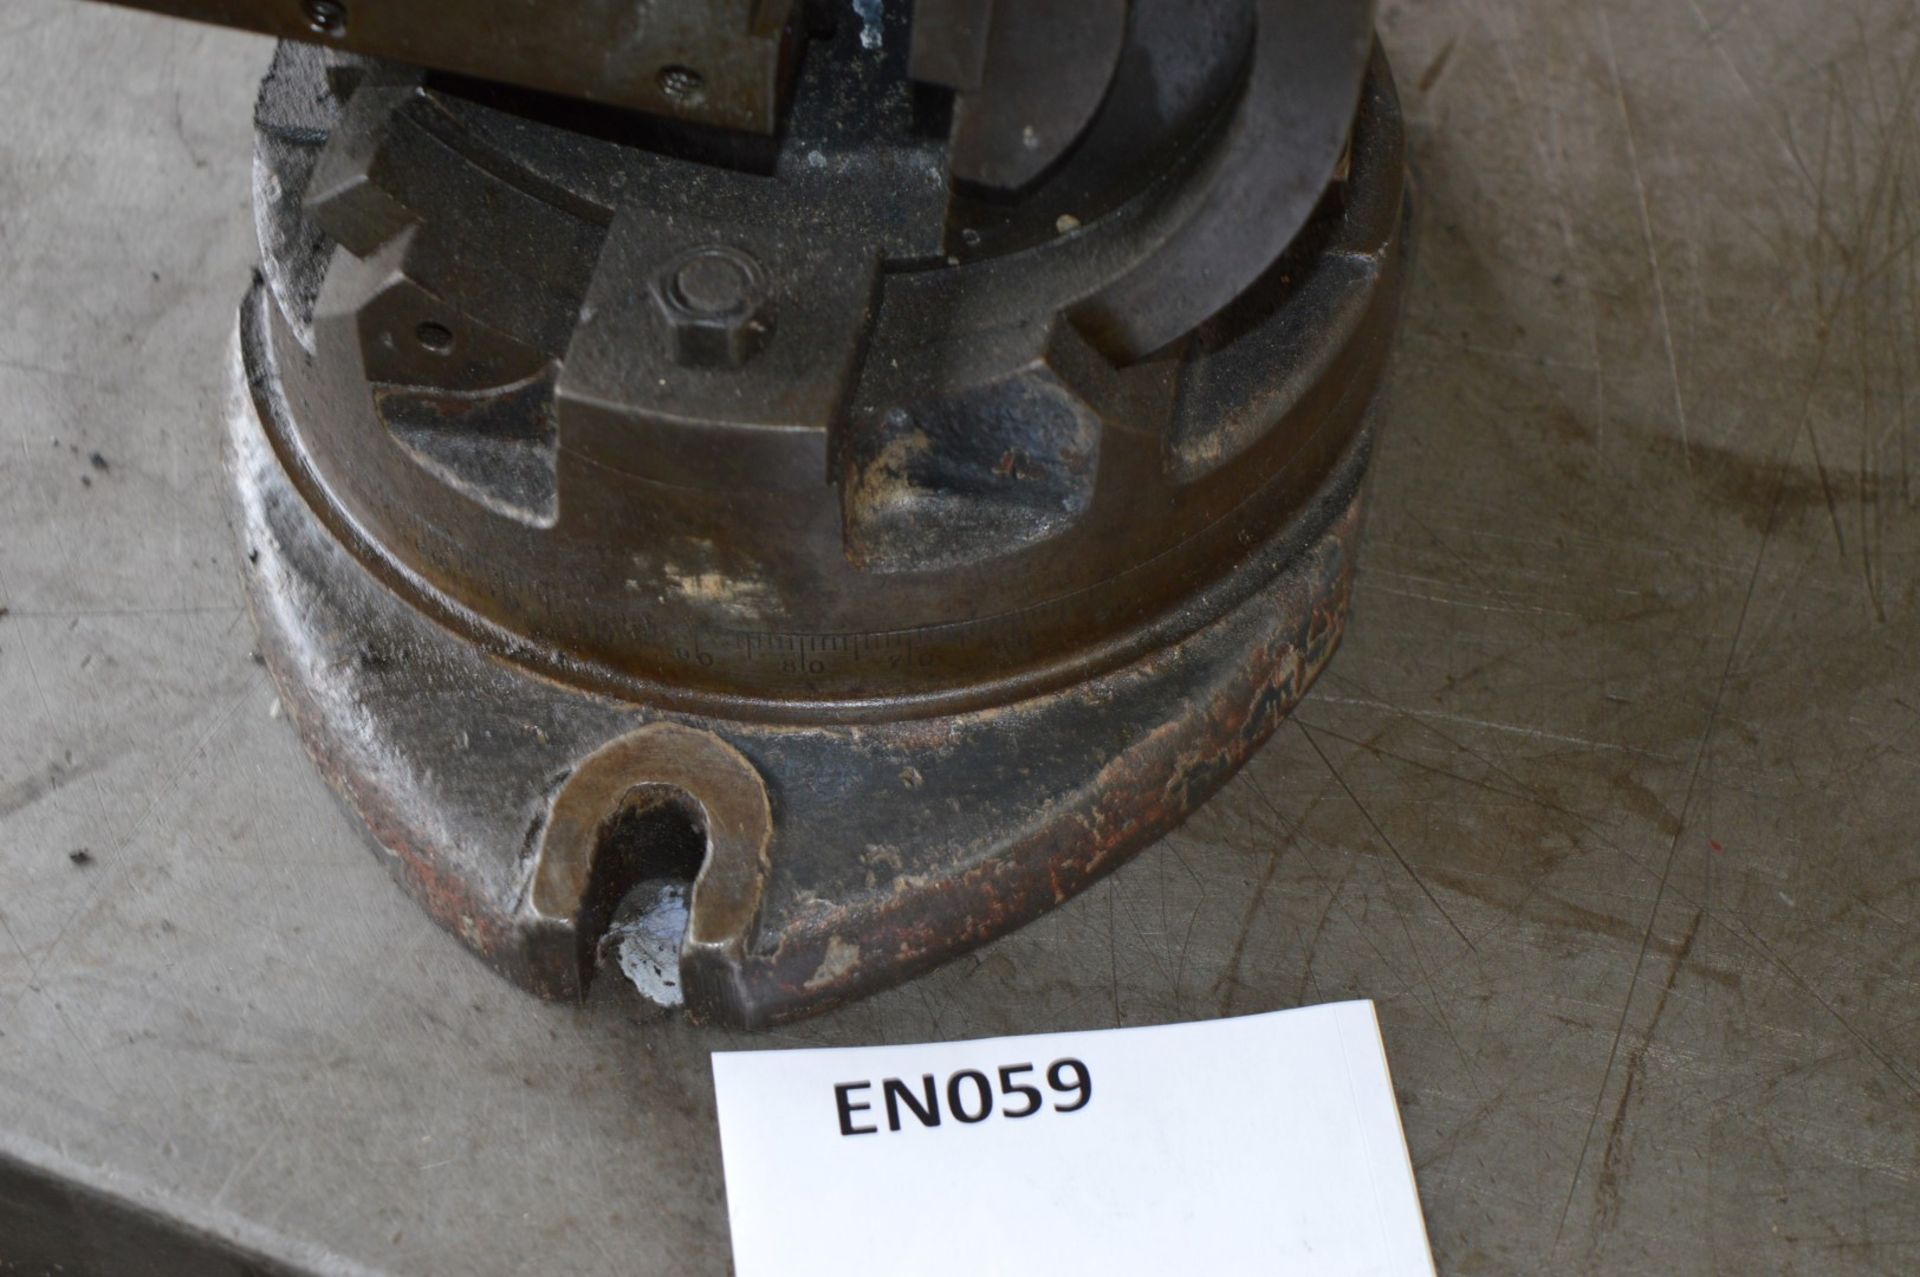 1 x Abwood Heavy Duty Tilting & Swiveling Machine Vice - CL202 - Ref EN059 - Location: Worcester - Image 6 of 6